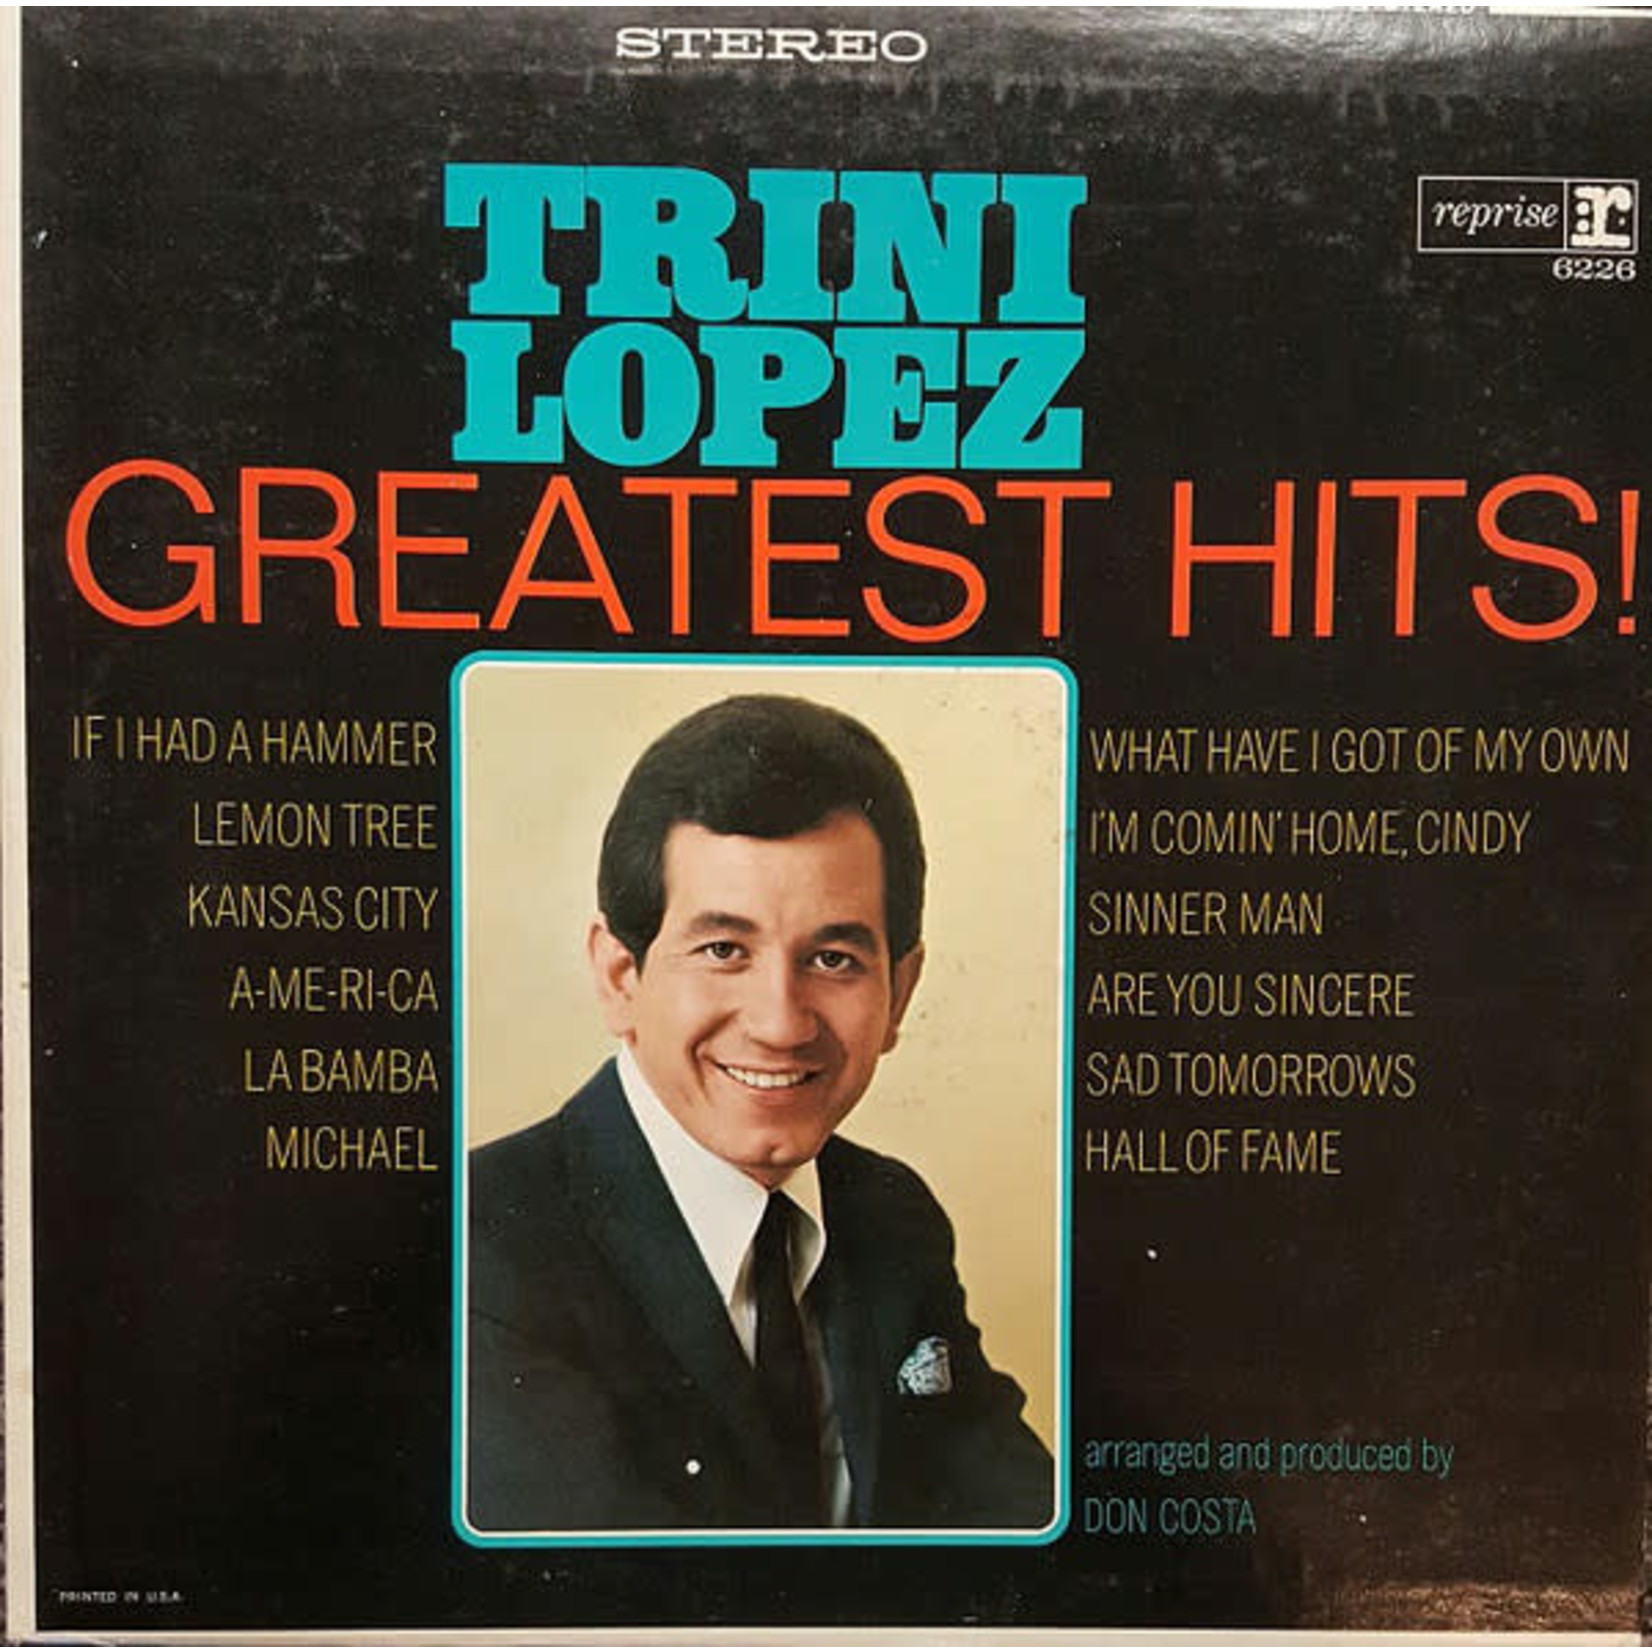 Trini Lopez Trini Lopez – Greatest Hits! (VG, 1966, LP, Reprise Records – RS 6226)